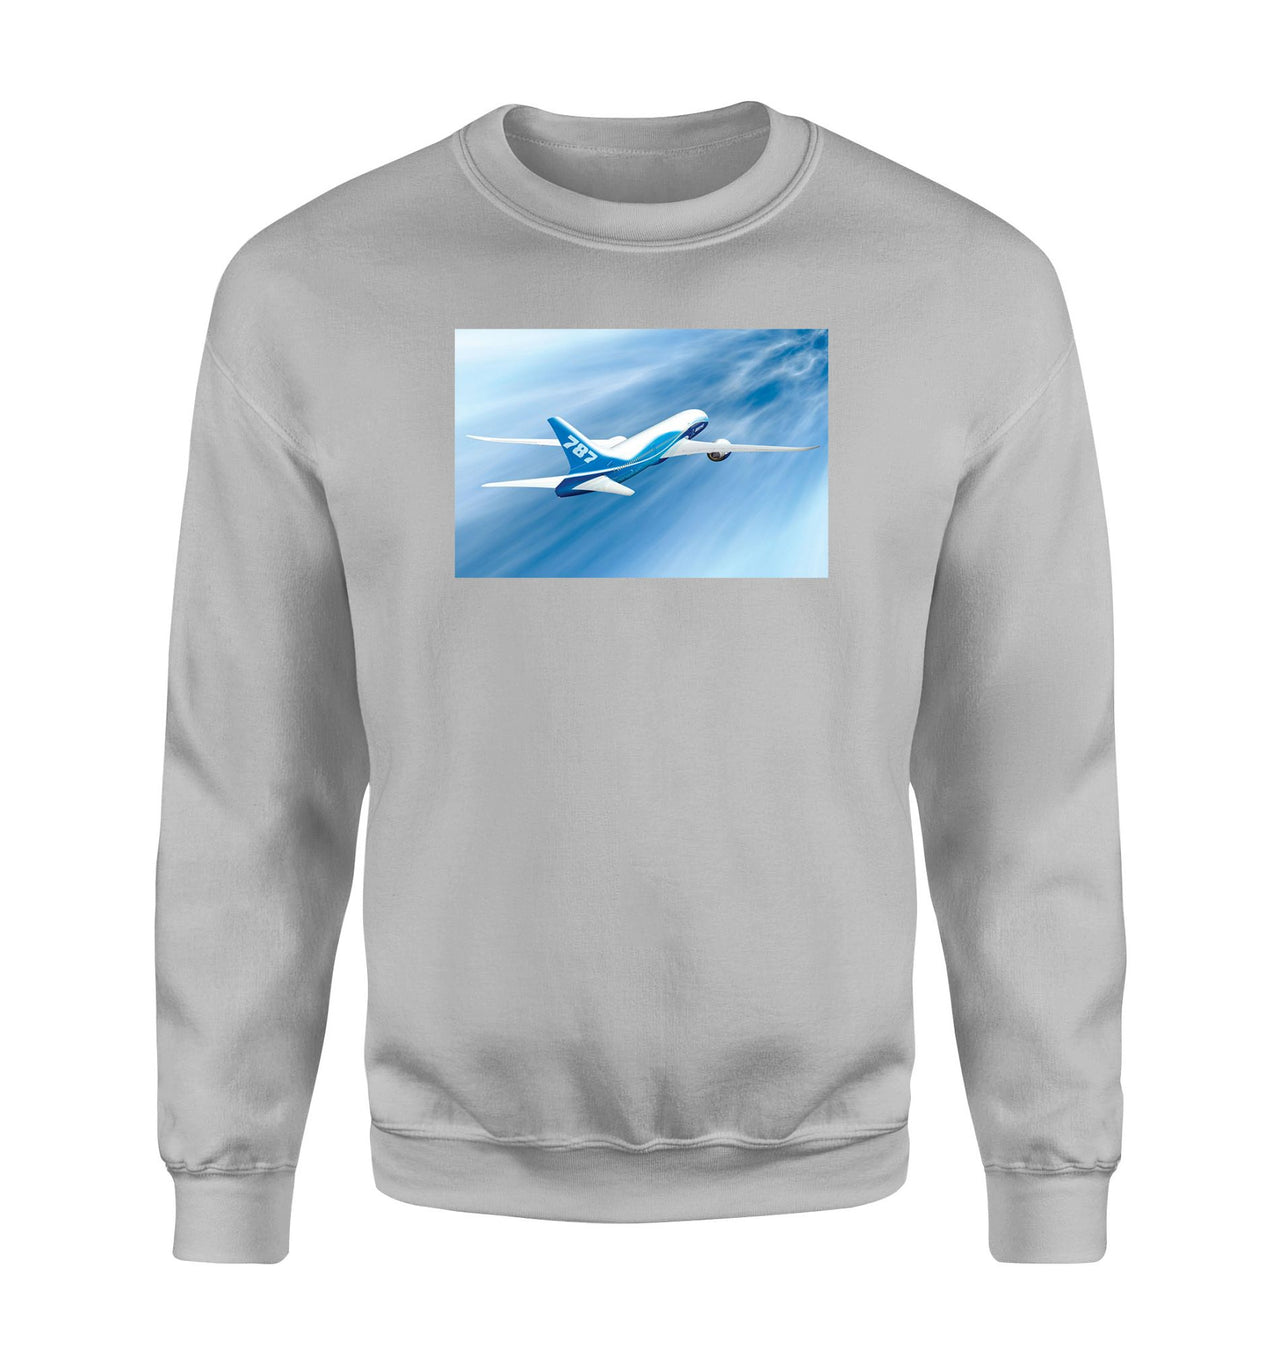 Beautiful Painting of Boeing 787 Dreamliner Designed Sweatshirts